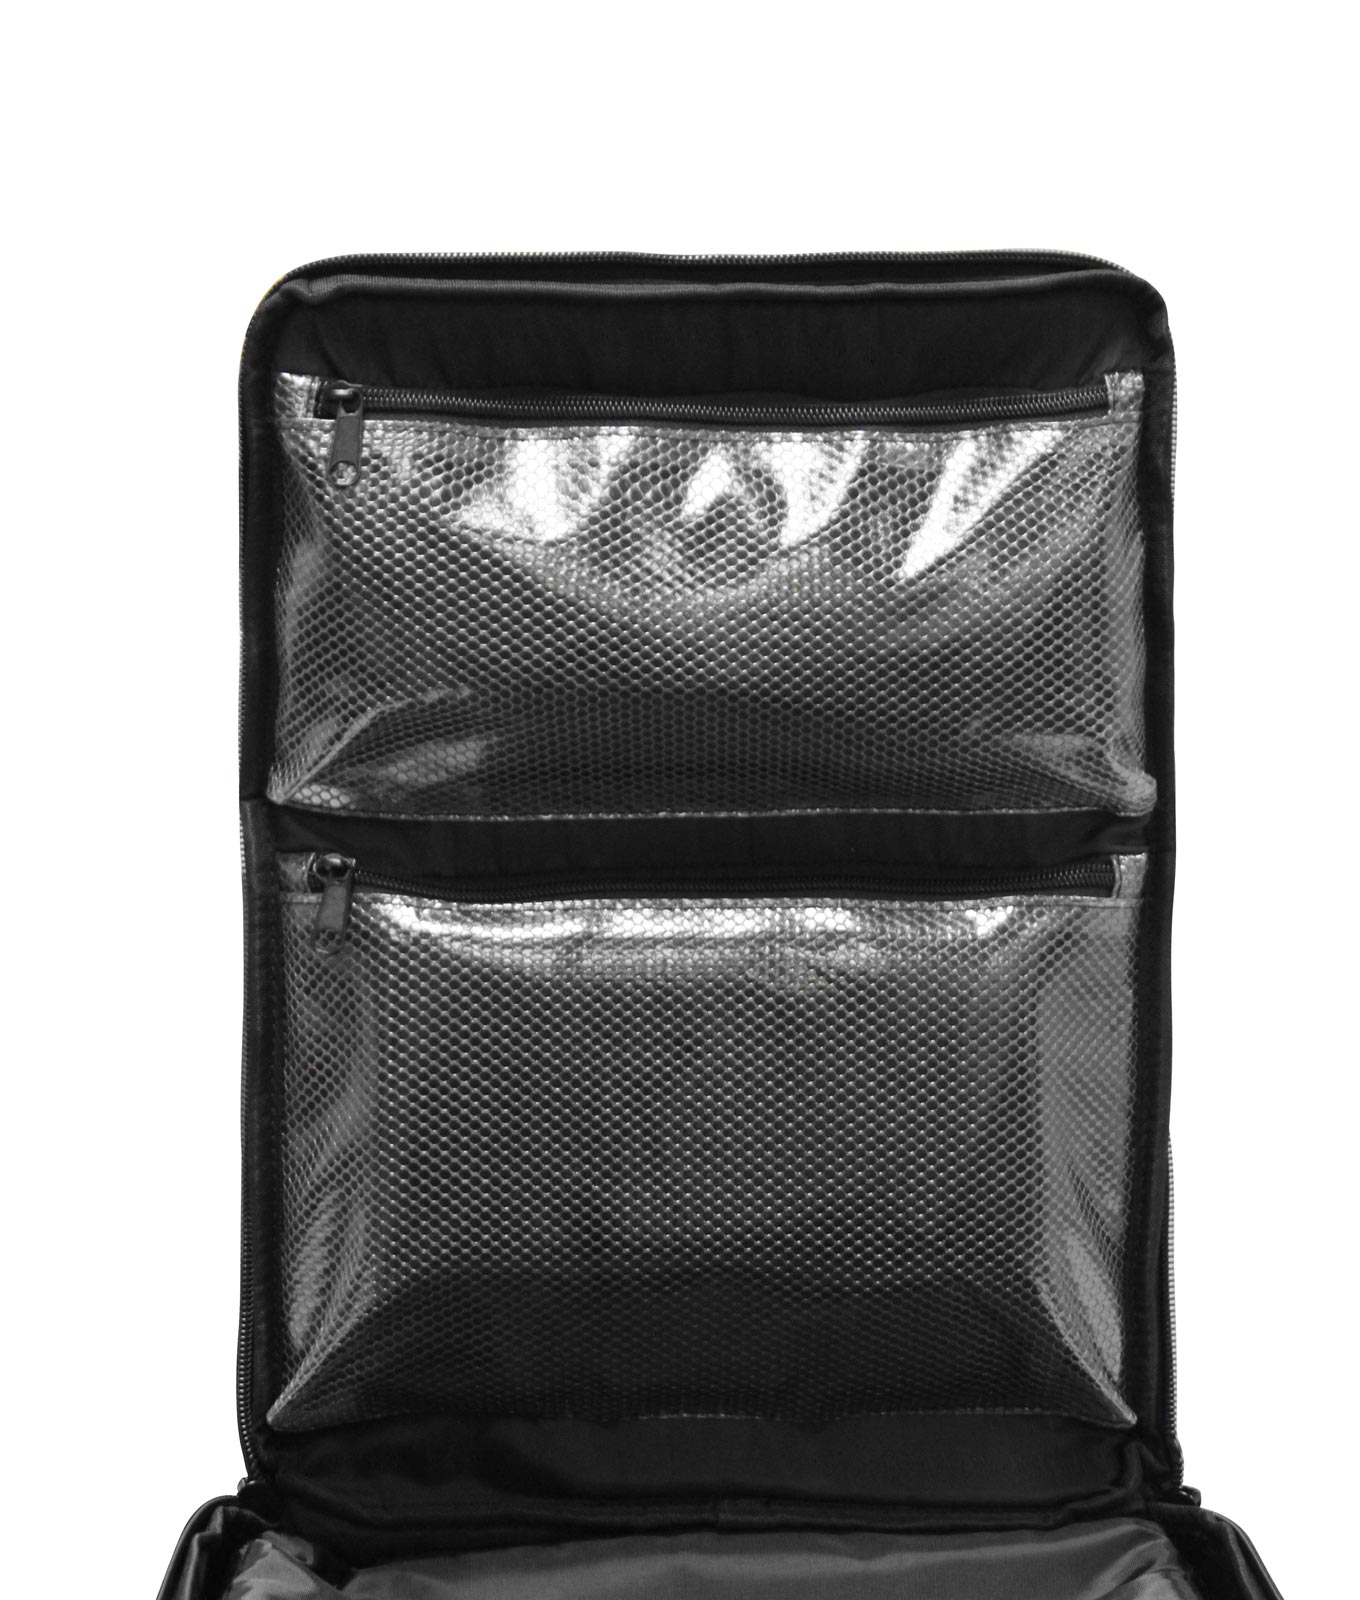 ODYSSEY BRXMK2BP10 STANDARD SIZE Digital Gear Backpack | Holds 10 